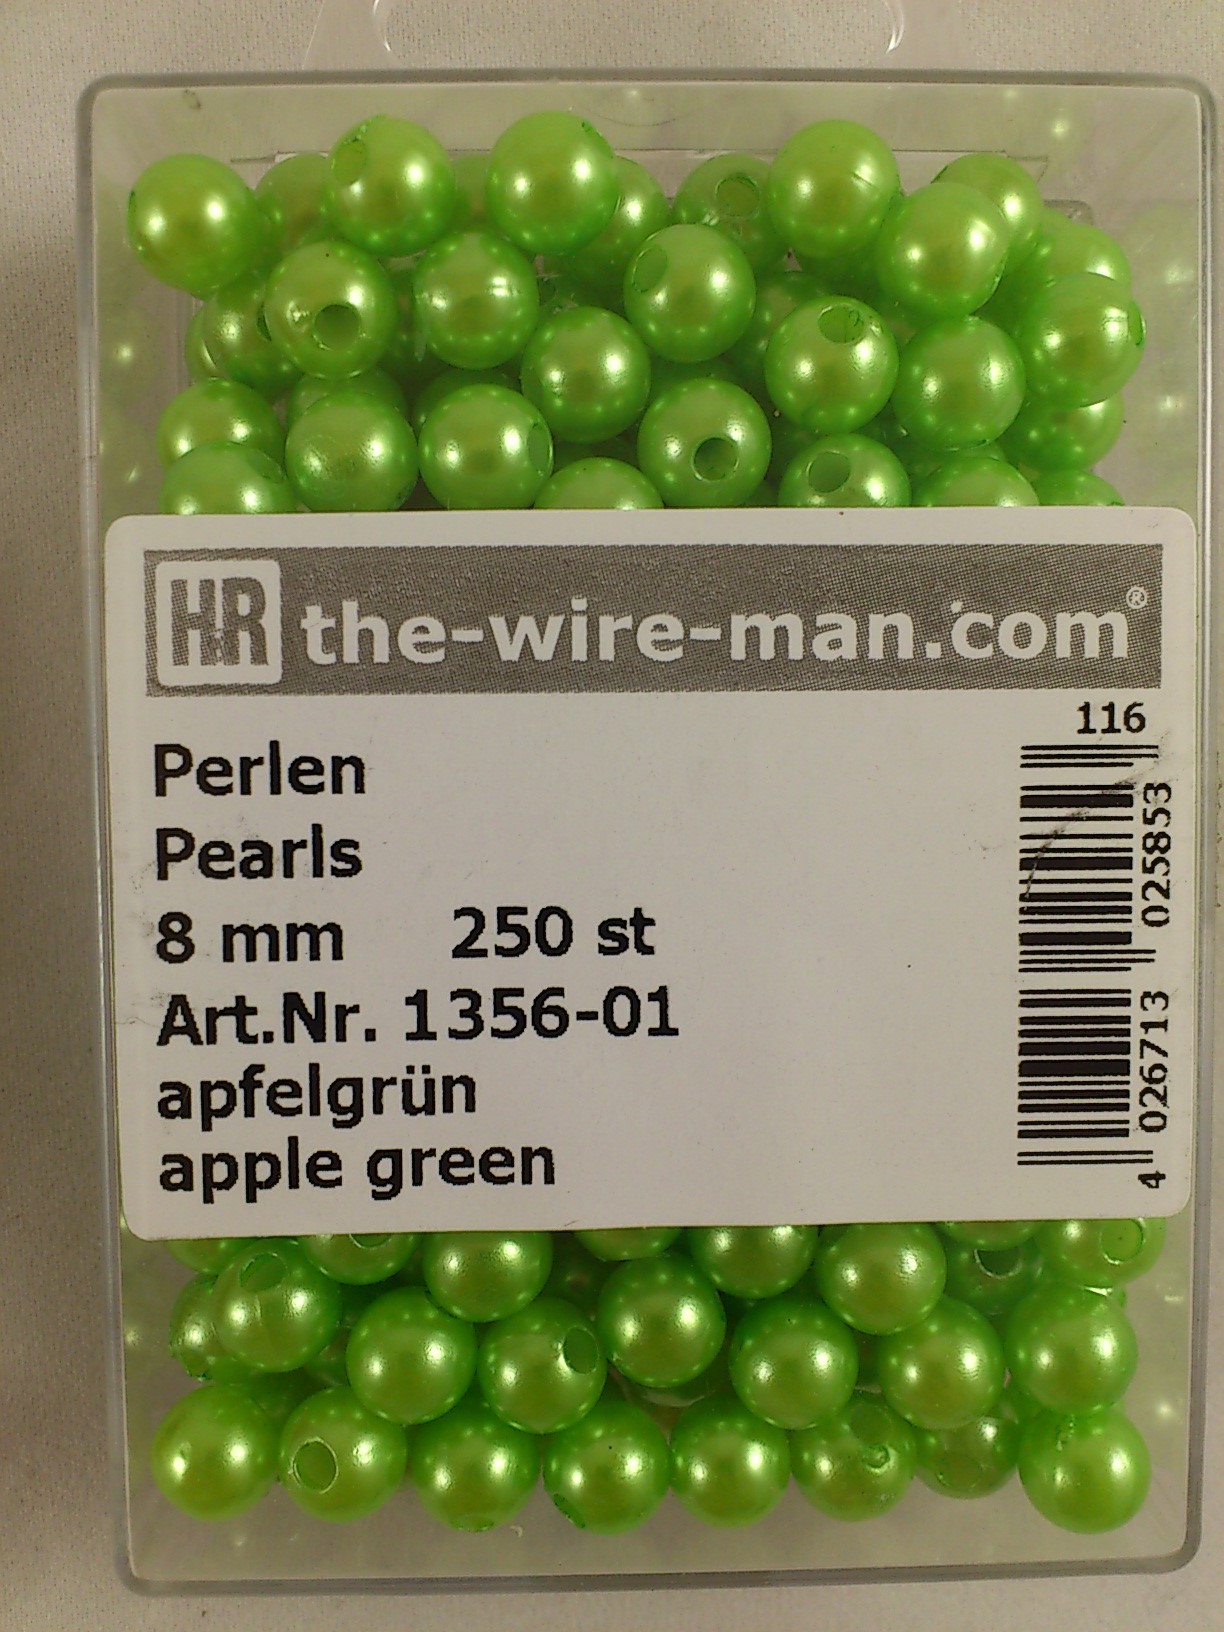 Perlen apfelgrün 8 mm. 250 st.